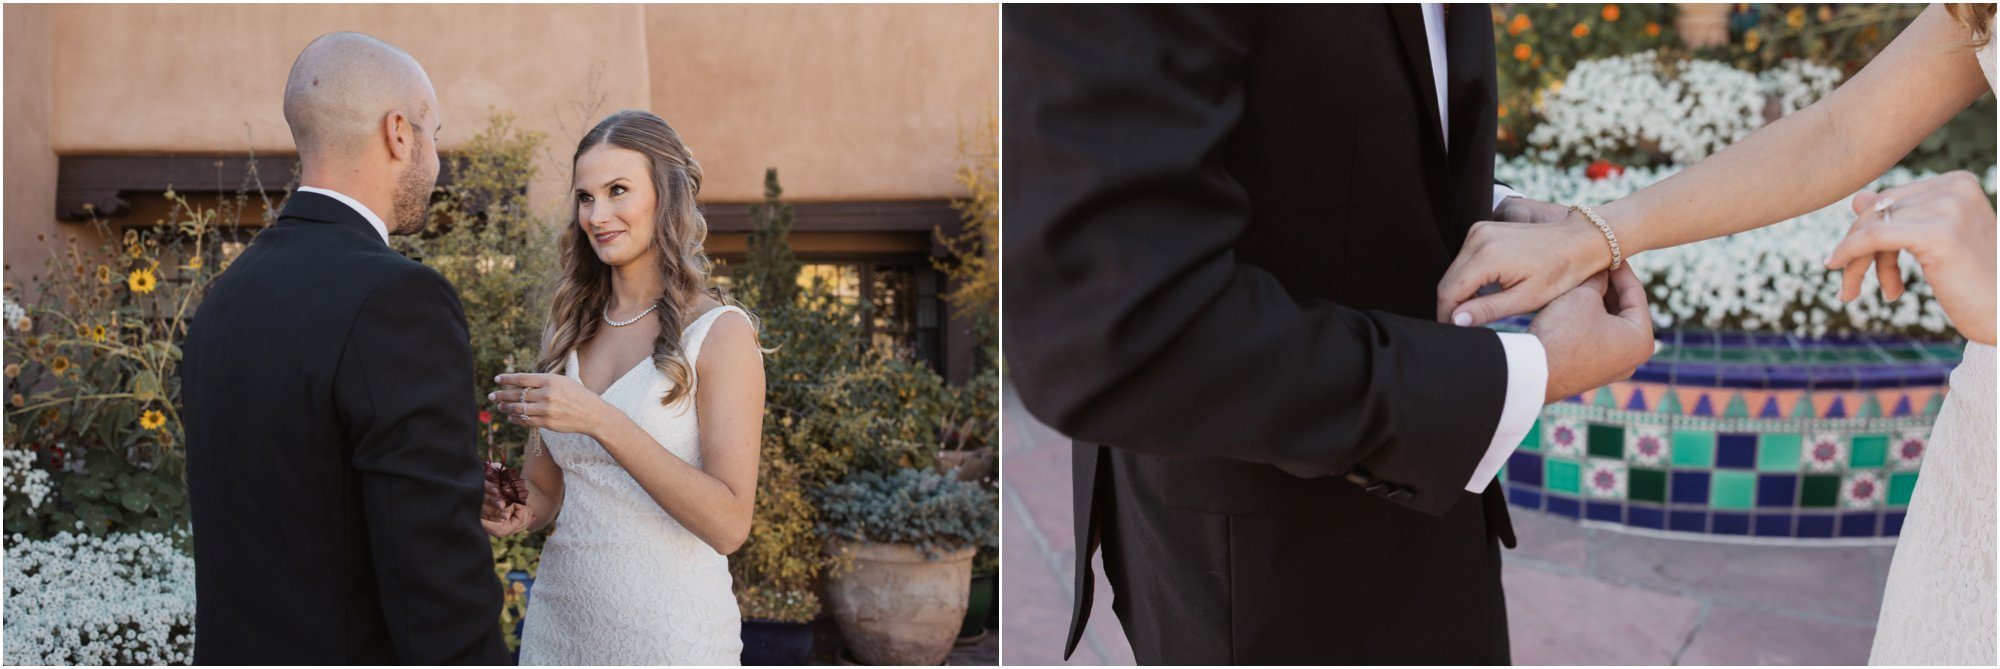 Albuquerque_ Santa Fe_ New Mexico_ Wedding_ Photography_ Photographers_ Blue Rose Photography Studio